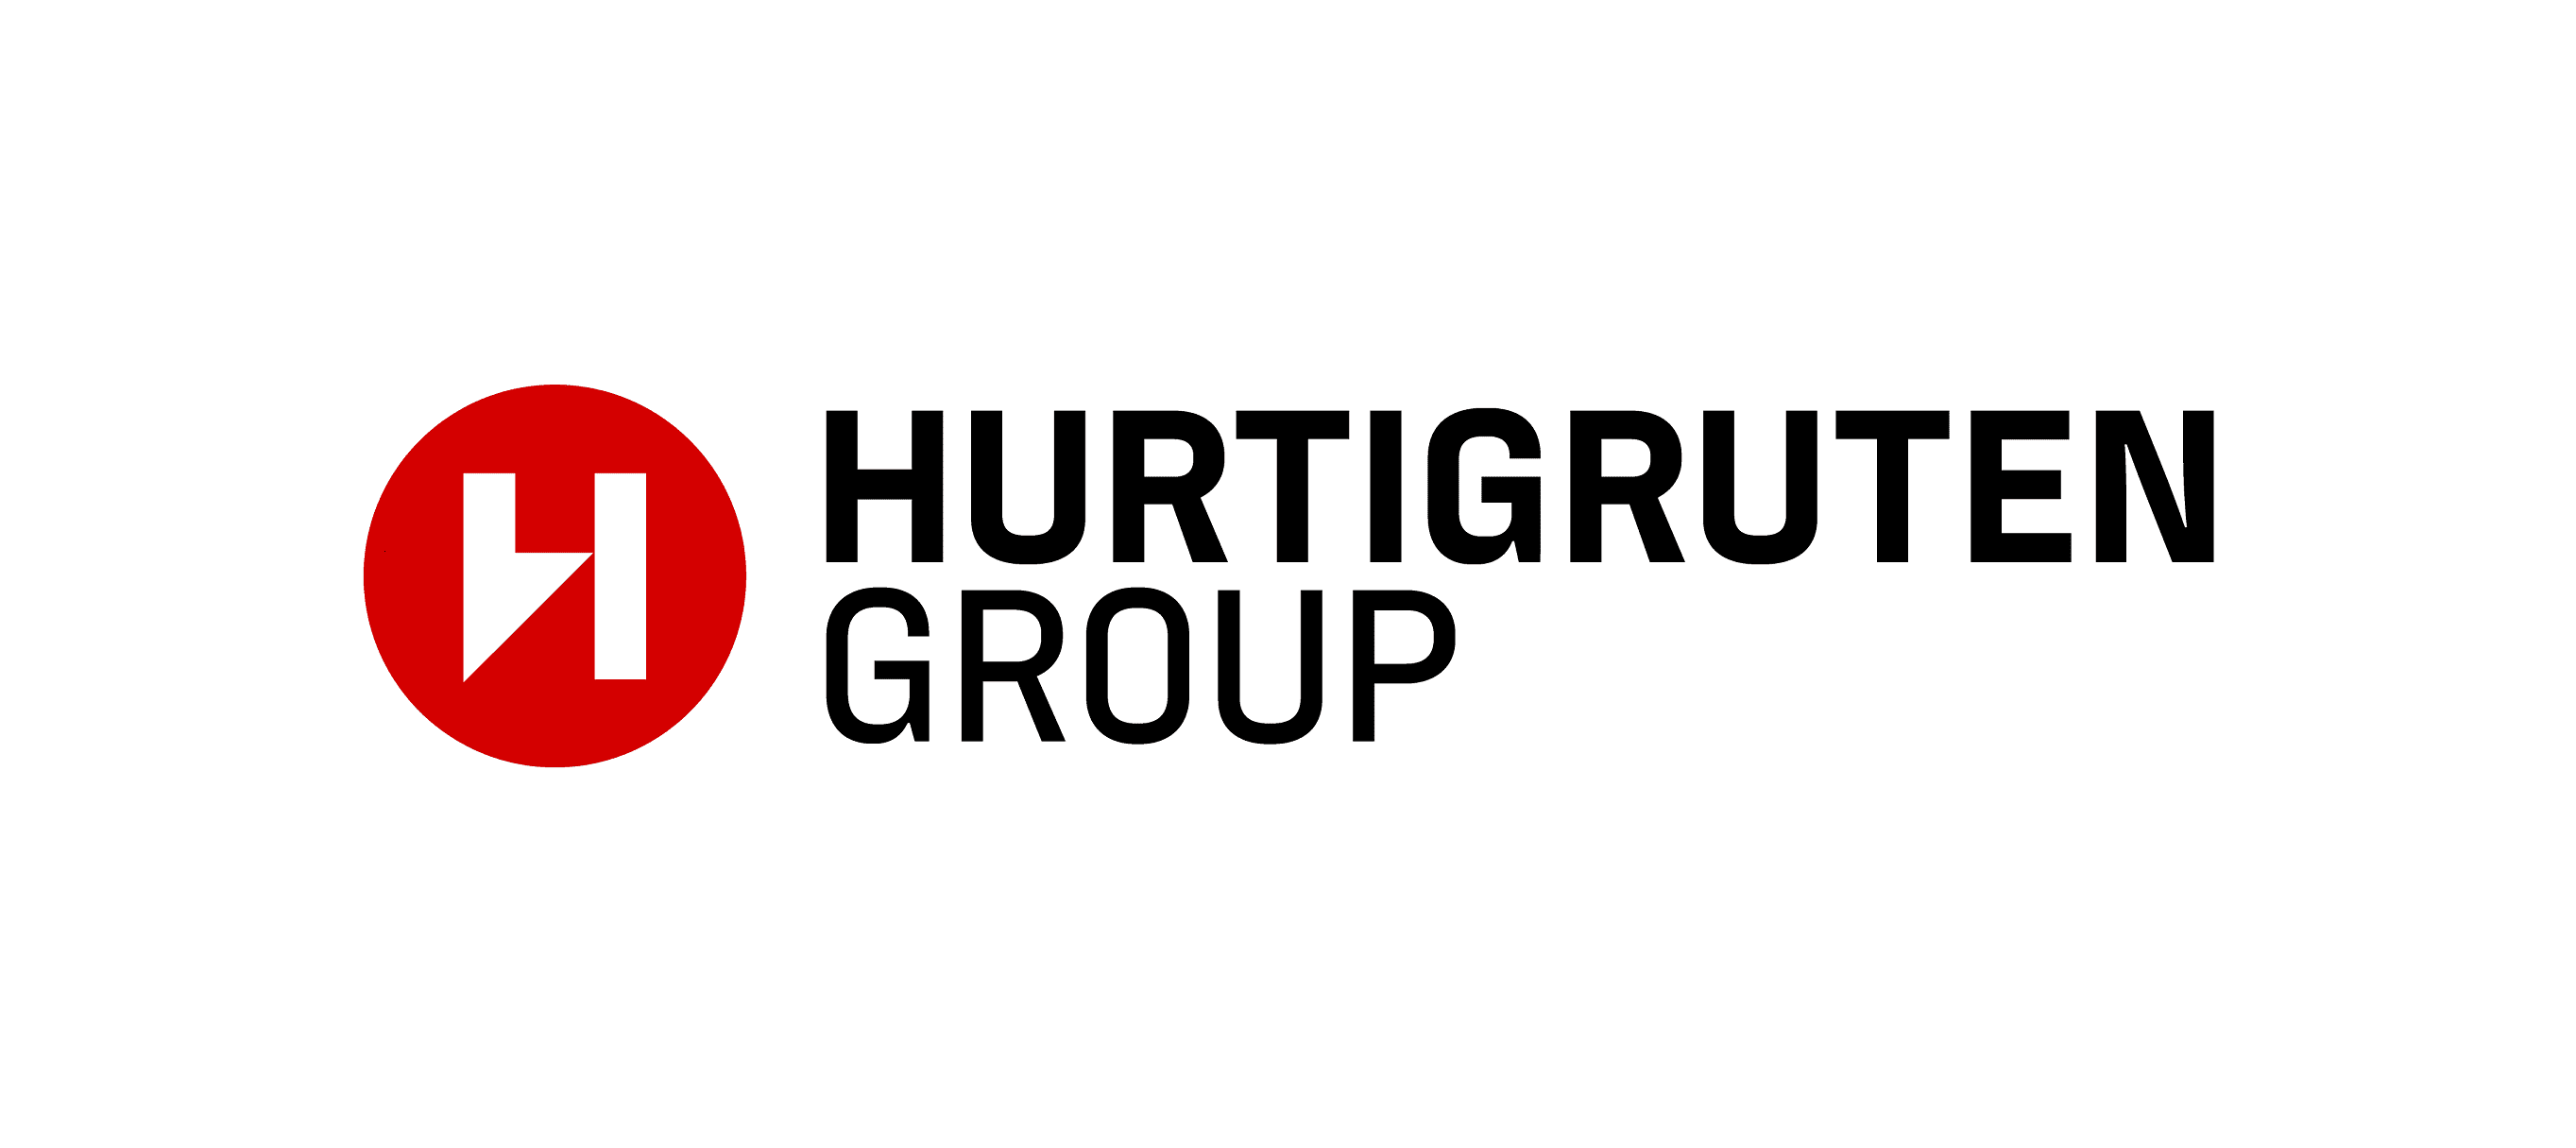 HR GROUP logo POS RGB 6